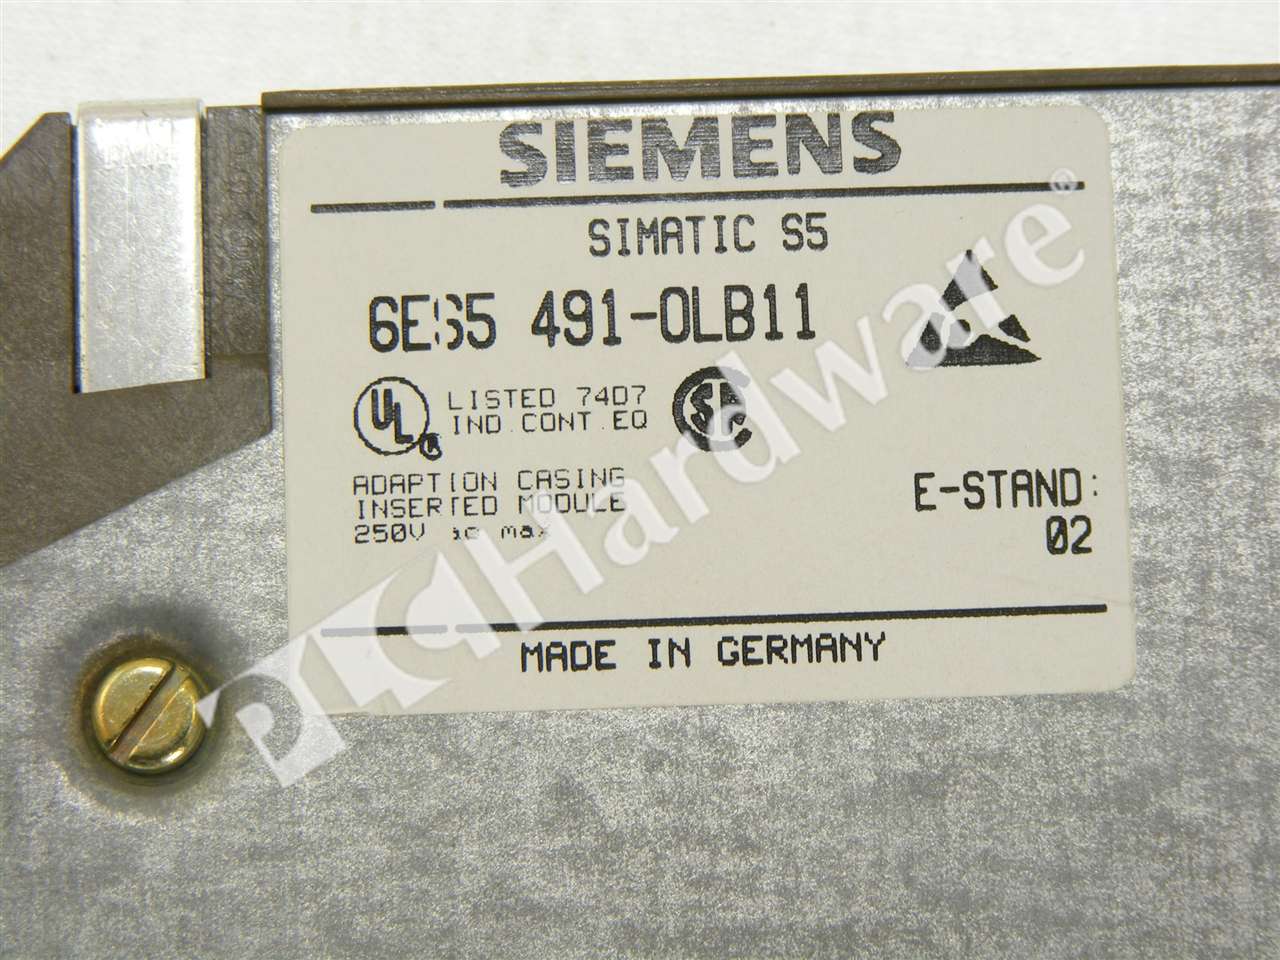 Siemens 6ES5491-0LB11 Adaption Casing 6ES5 491-0LB11 